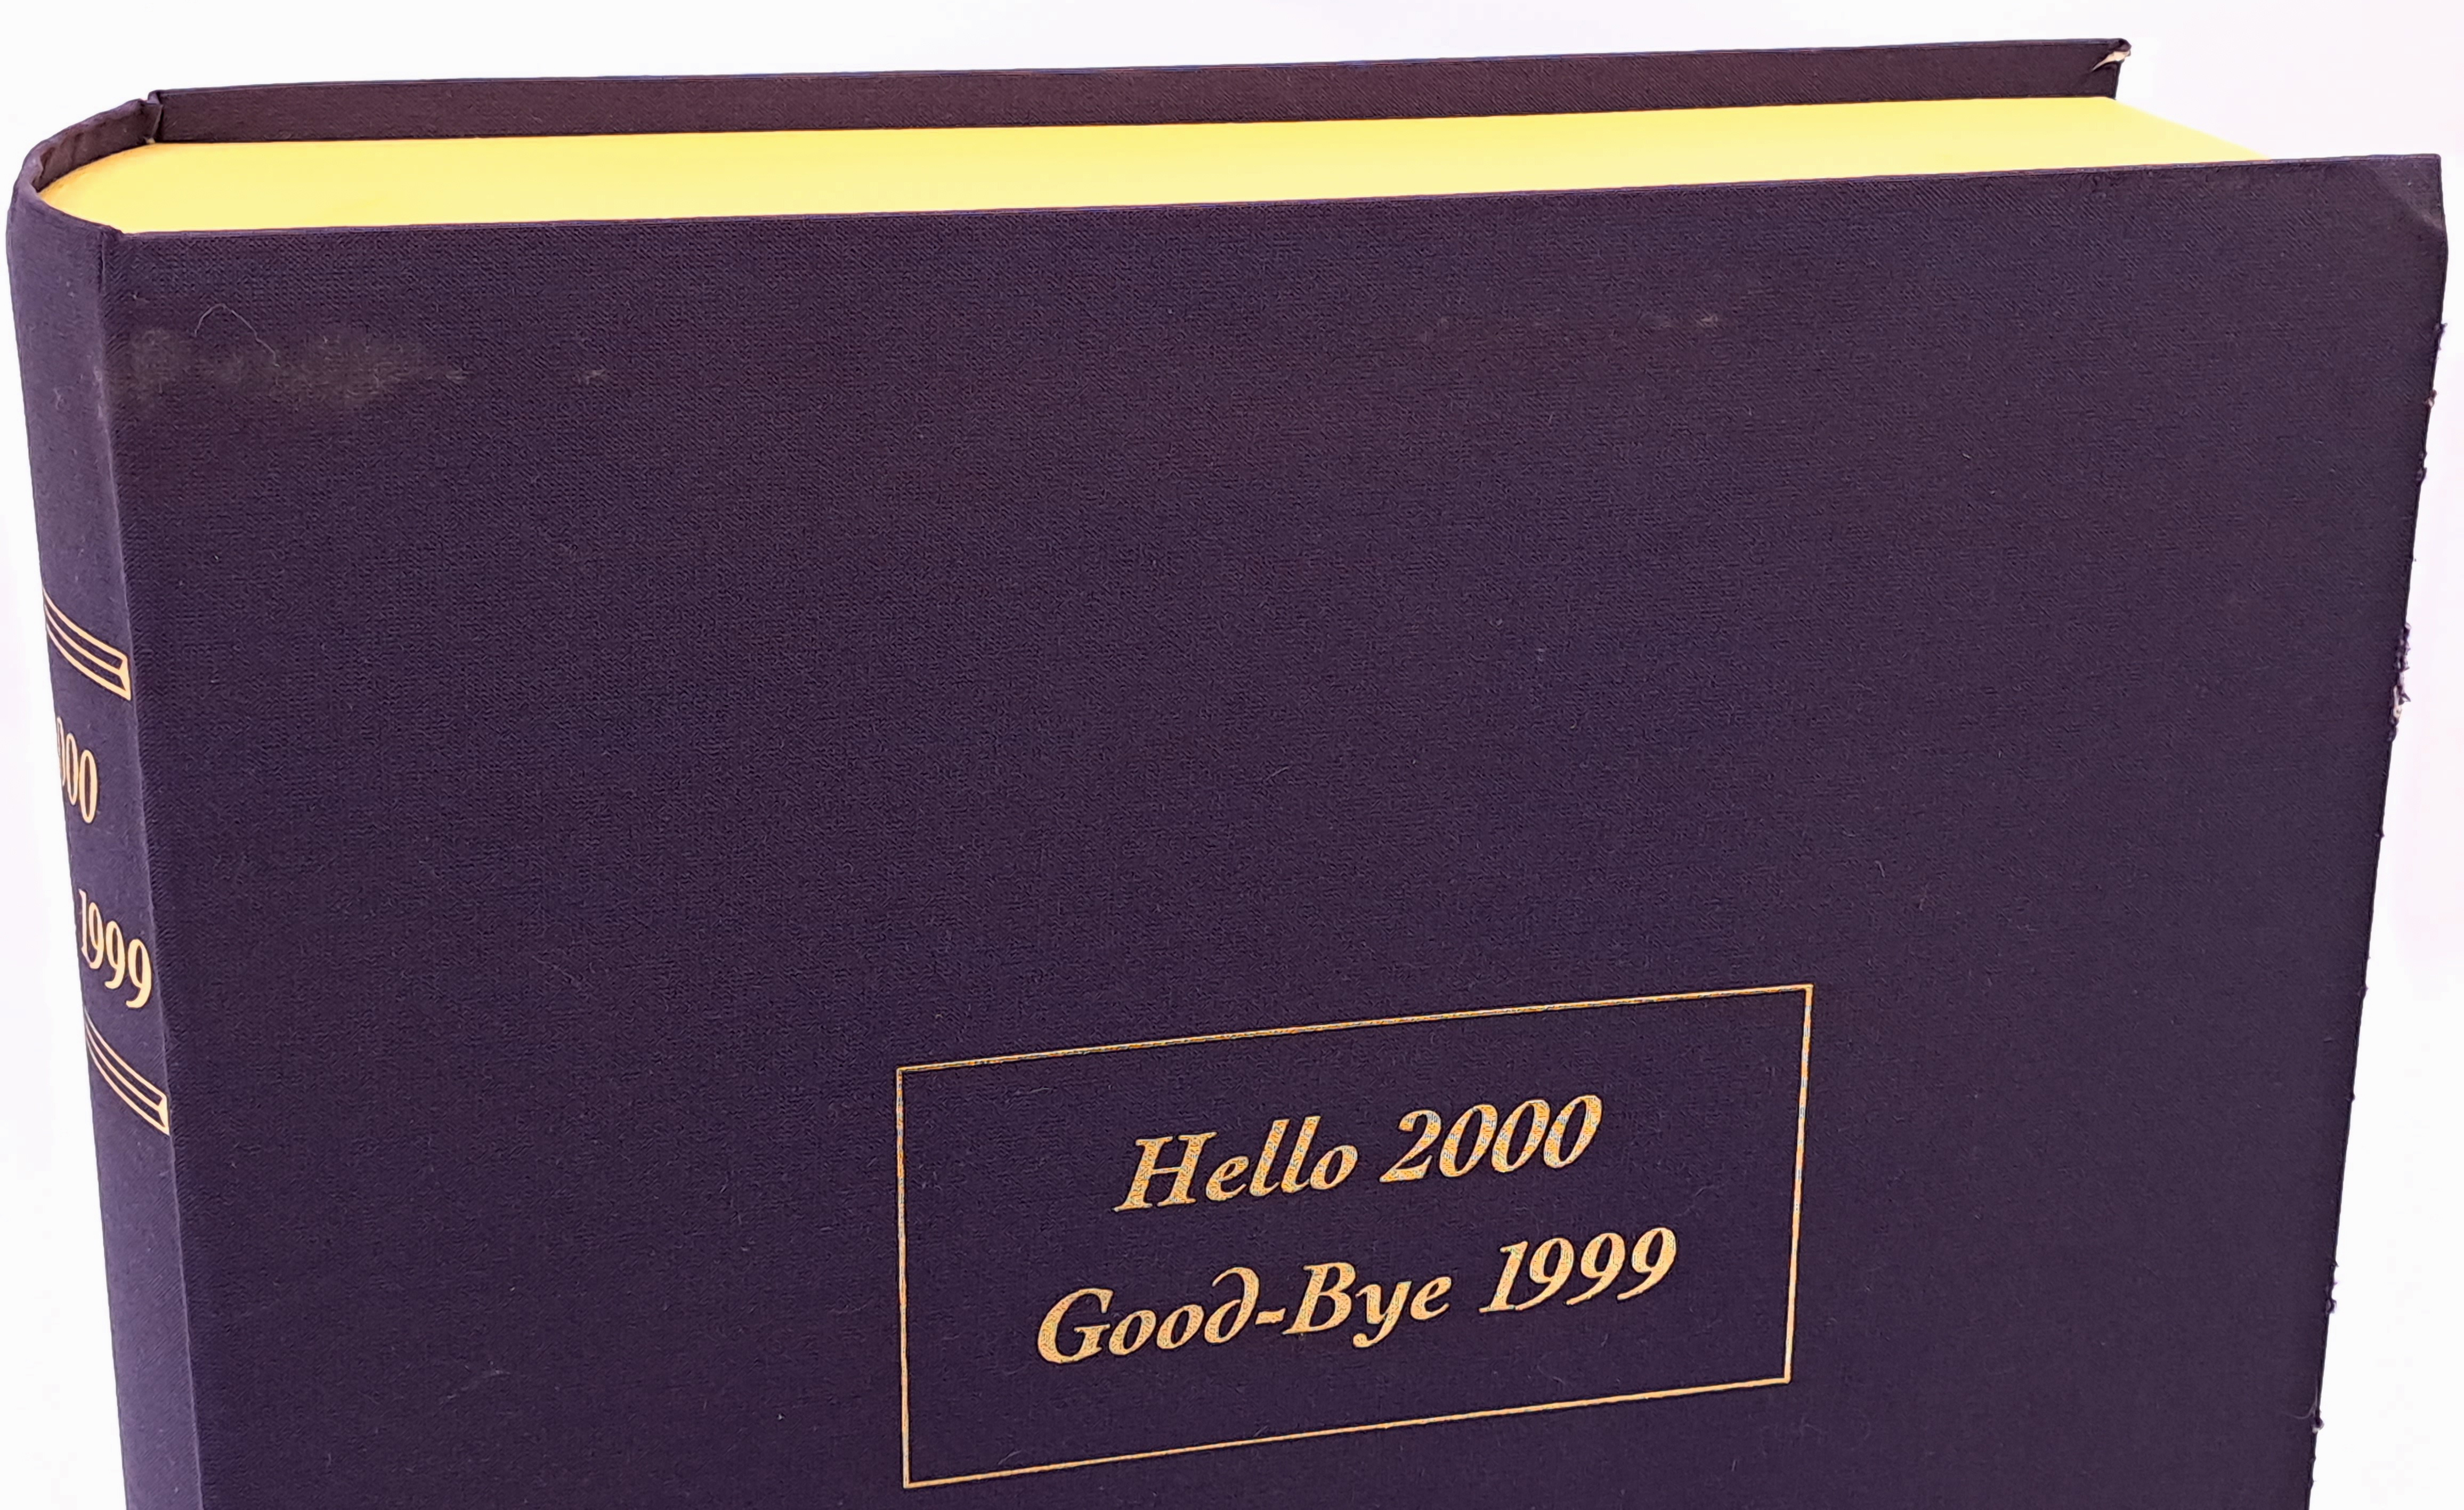 Steiff Hello 2000 Goodbye 1999 Teddy Bear set - Image 2 of 3